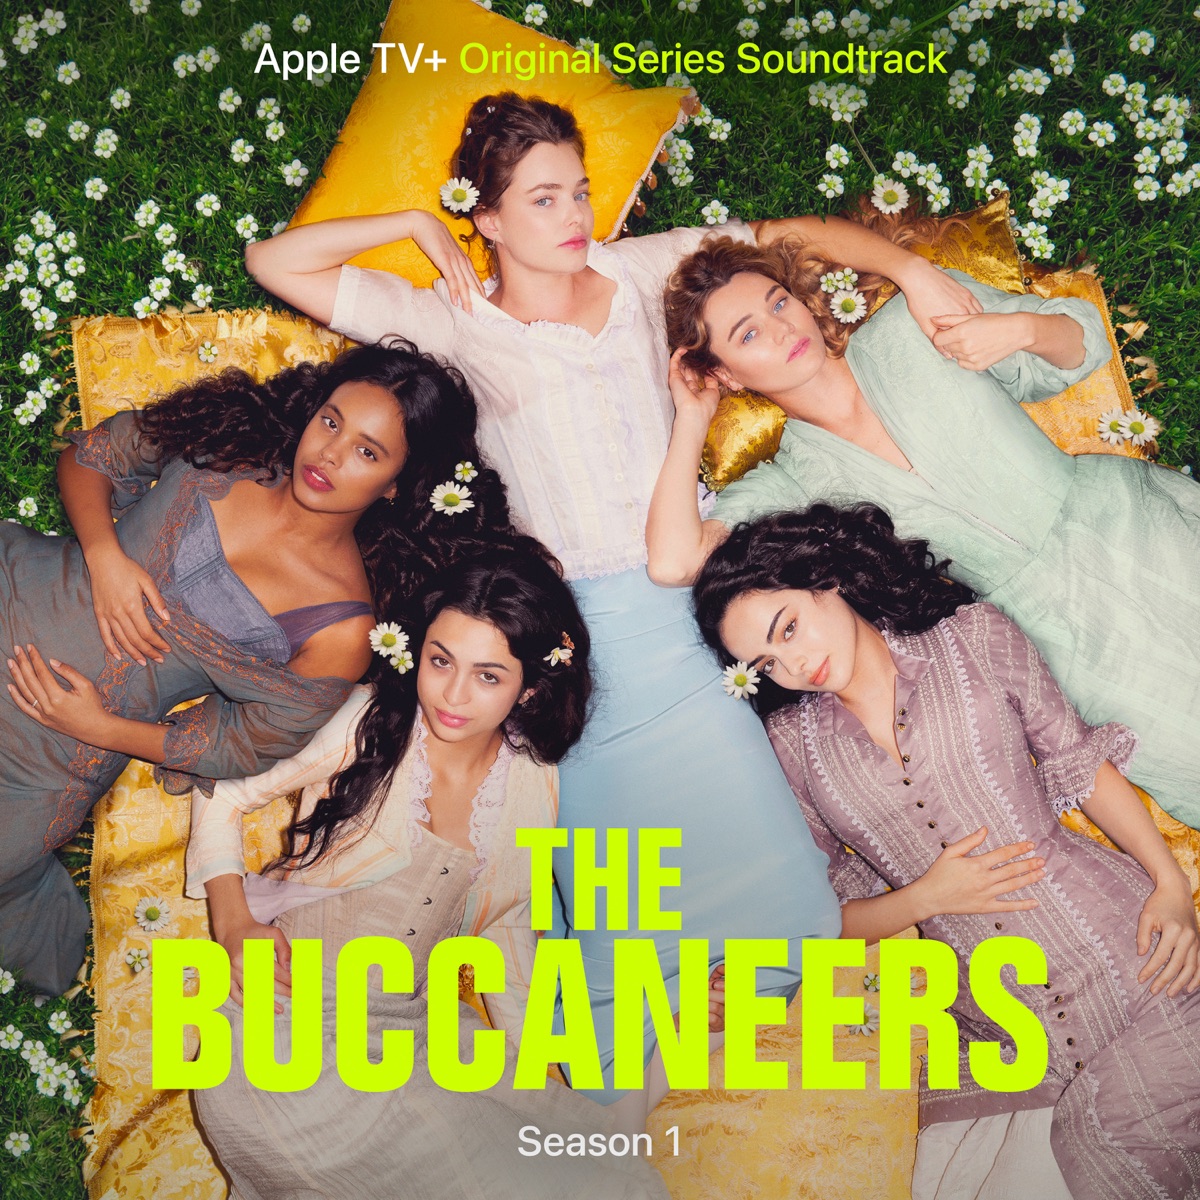 ALBUM Gracie Abrams, Sharon Van Etten & AVAWAVES – The Buccaneers Season 1 (Apple TV Original Series Soundtrack)